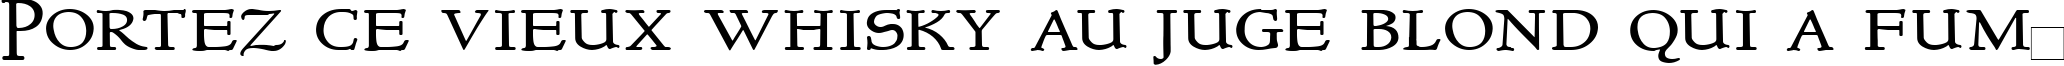 Пример написания шрифтом NewStyleTitling текста на французском